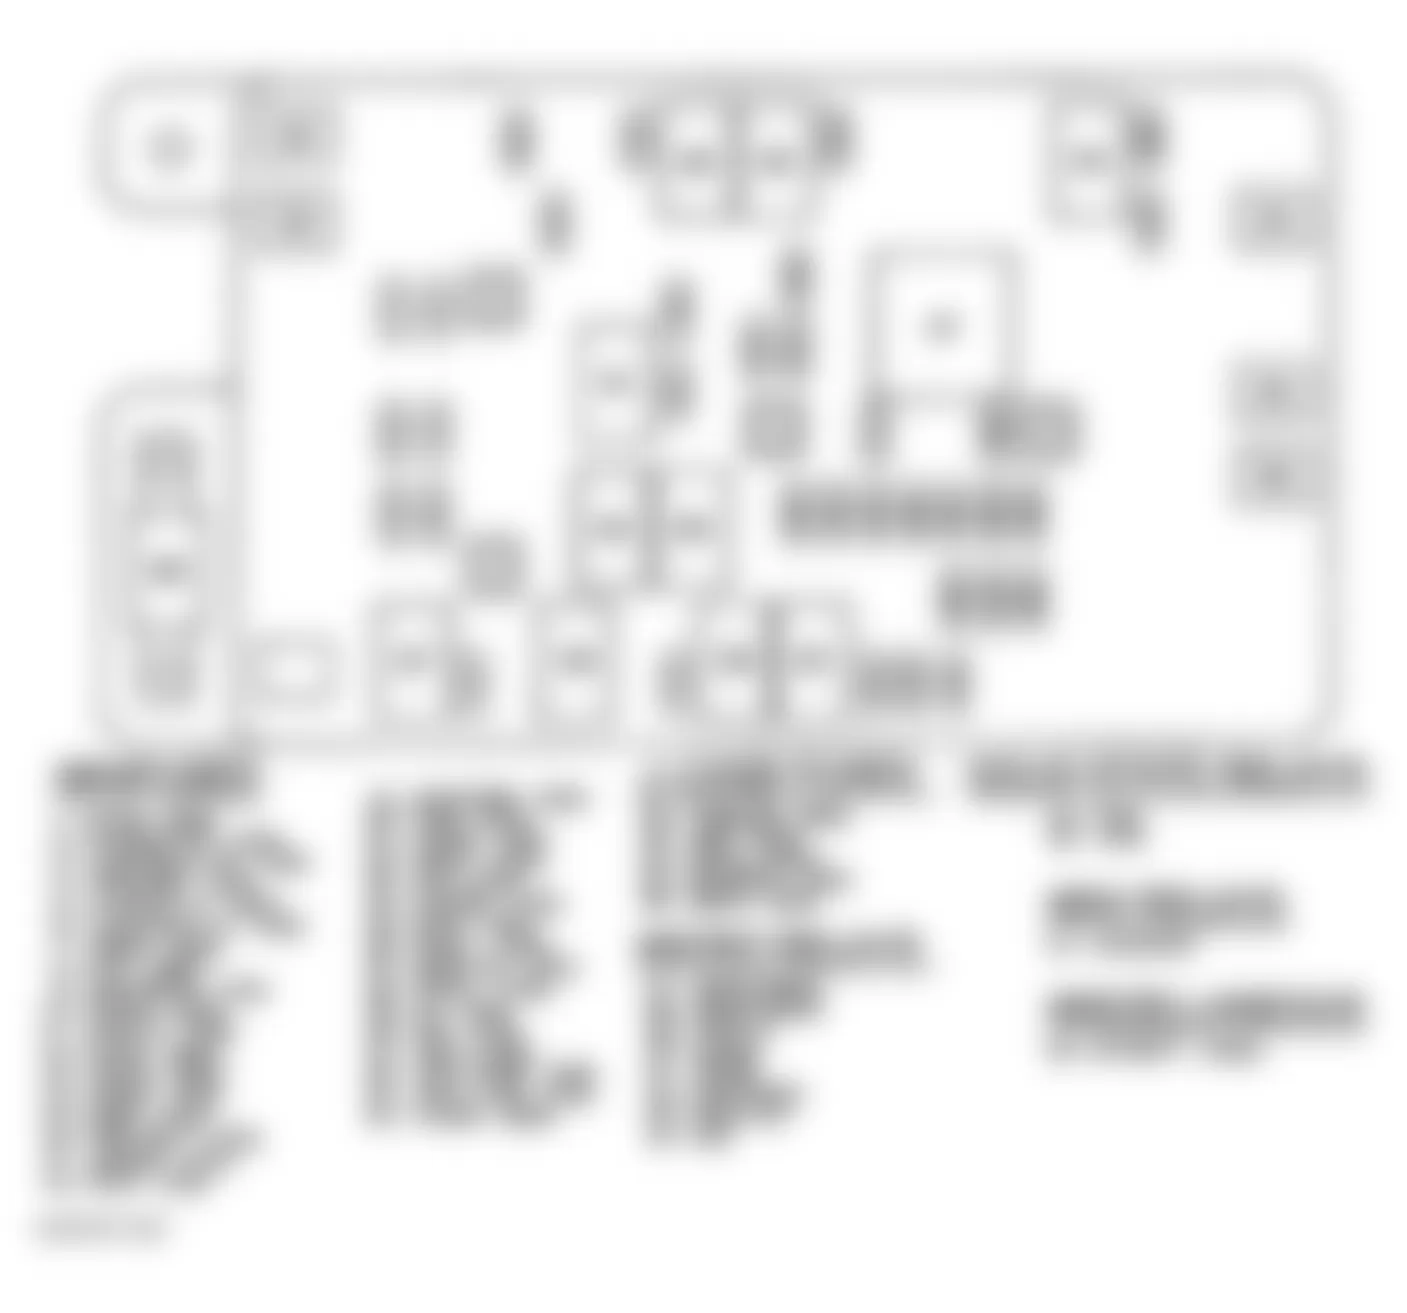 GMC Envoy XL 2003 - Component Locations -  Identifying Underhood Fuse Block Components (4.2L Engine)